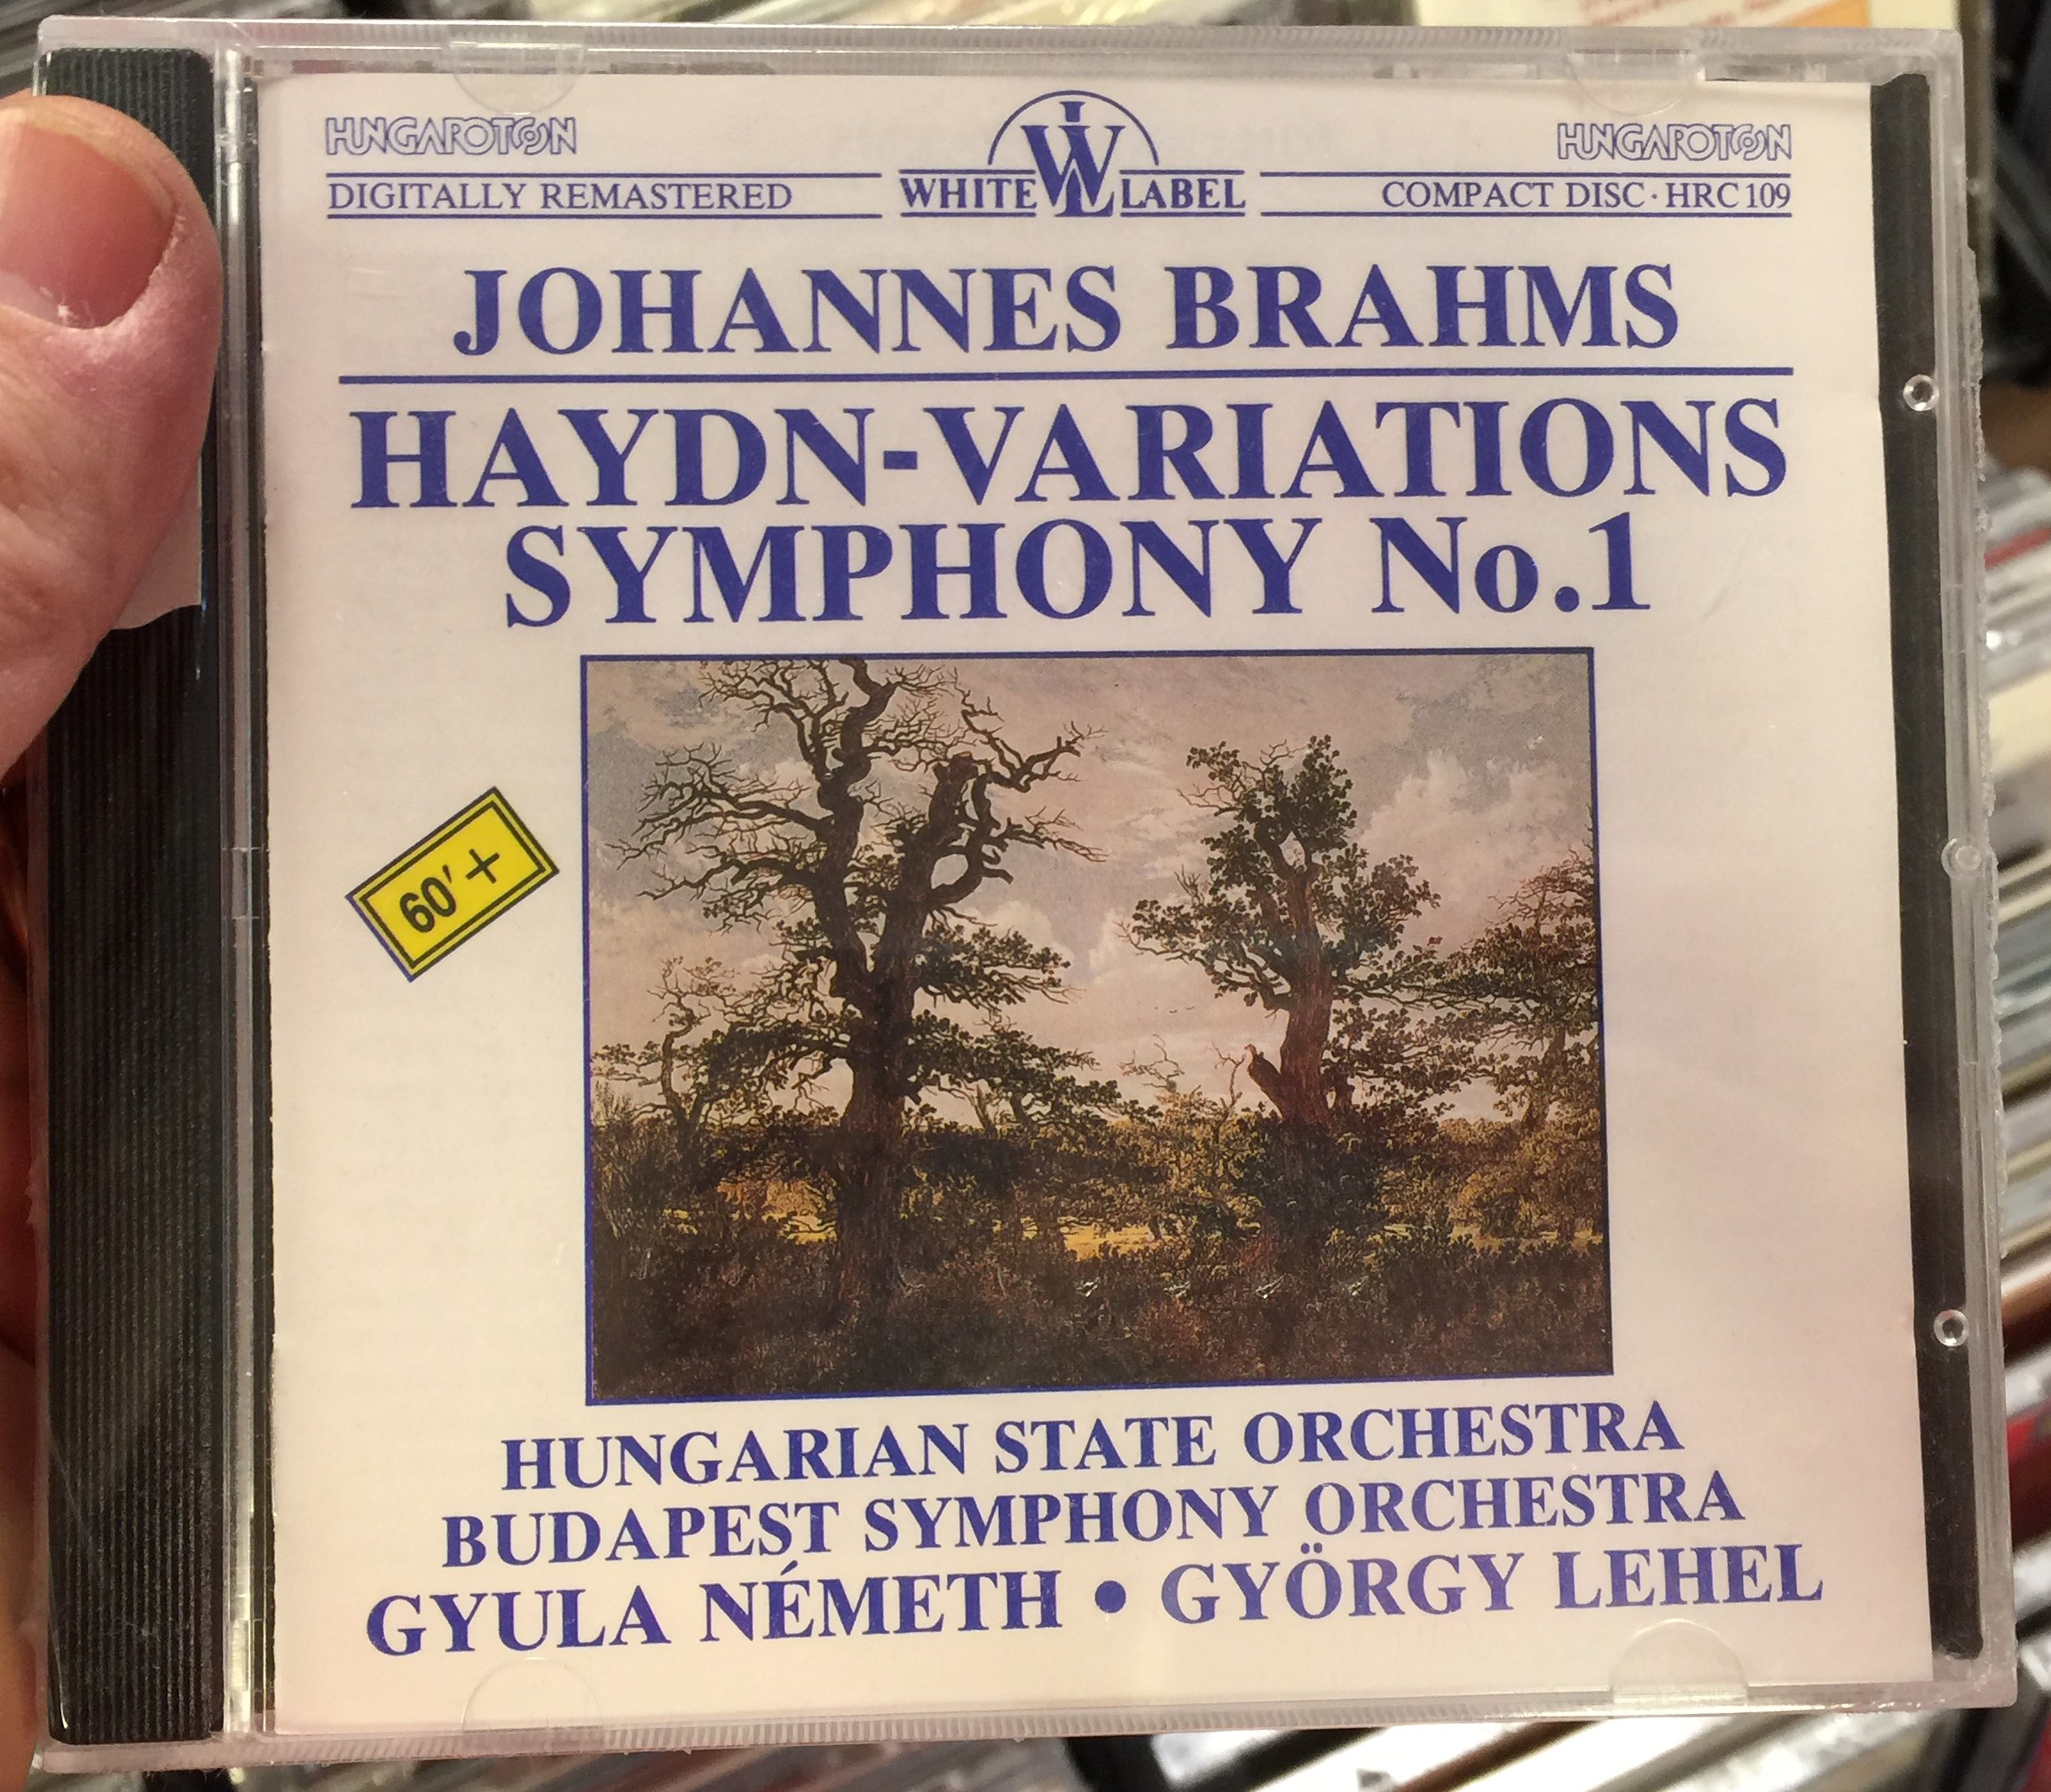 johannes-brahms-haydn-variations-symphony-no.1-hungarian-state-orchestra-budapest-symphony-orchestra-gyula-n-meth-gy-rgy-lehel-white-label-audio-cd-1988-hrc-109-1-.jpg